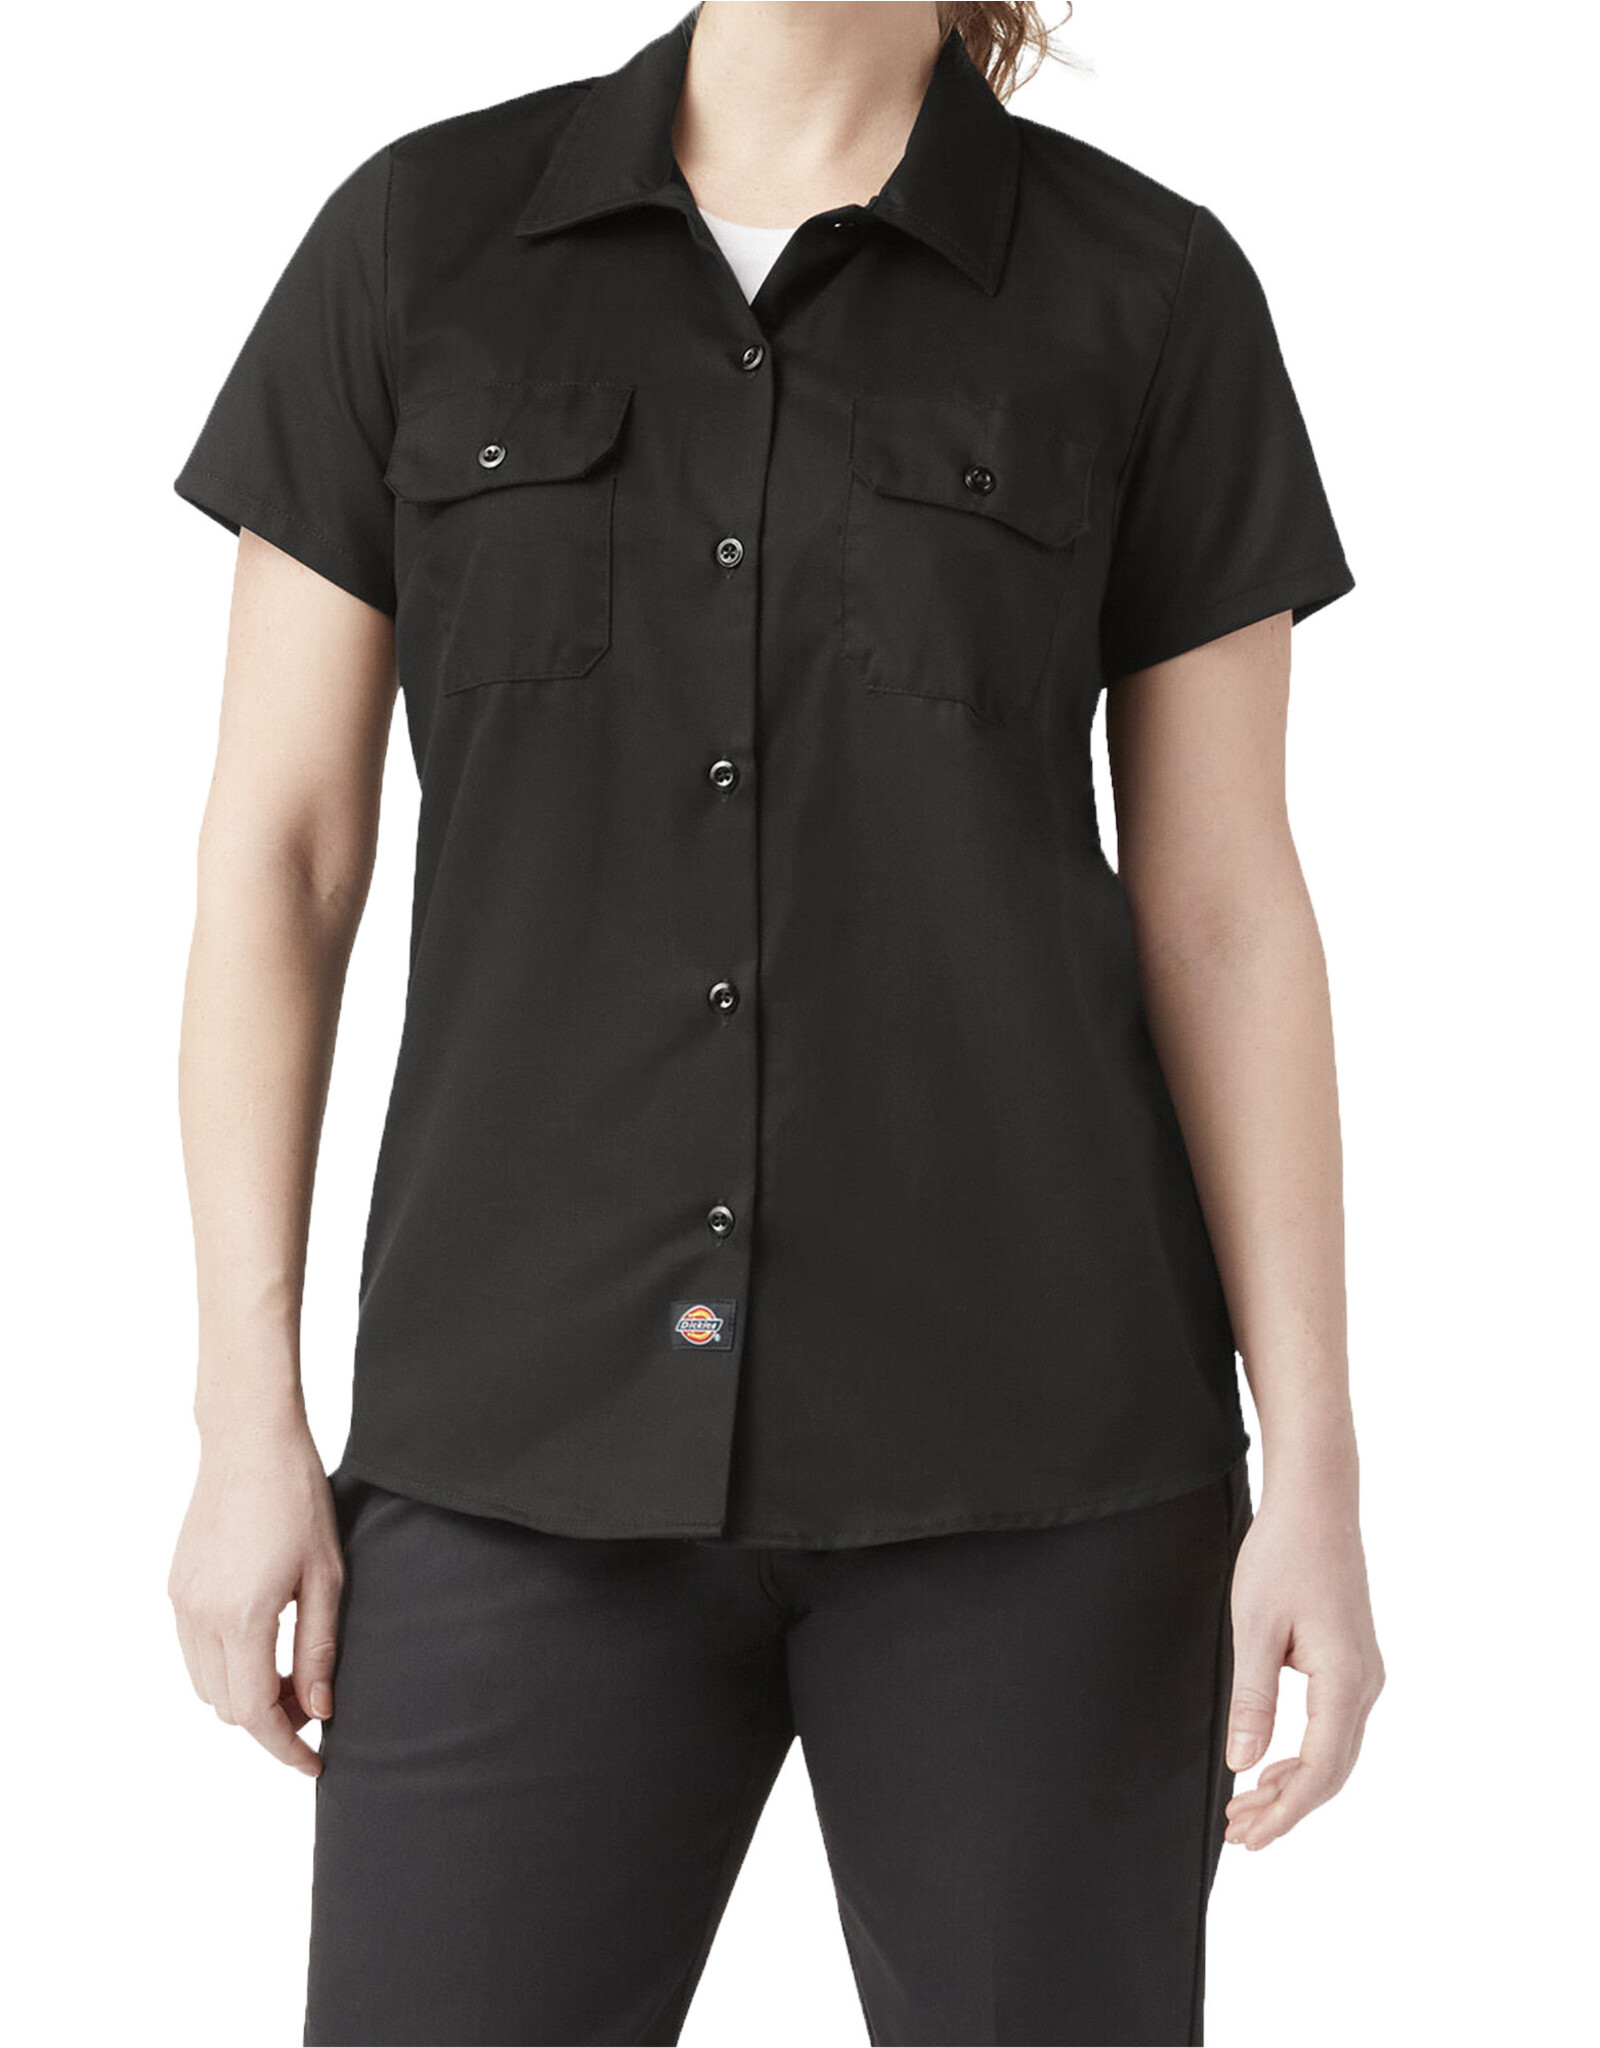 DICKIES Women's 574 Original Work Shirt Black - FS574BK